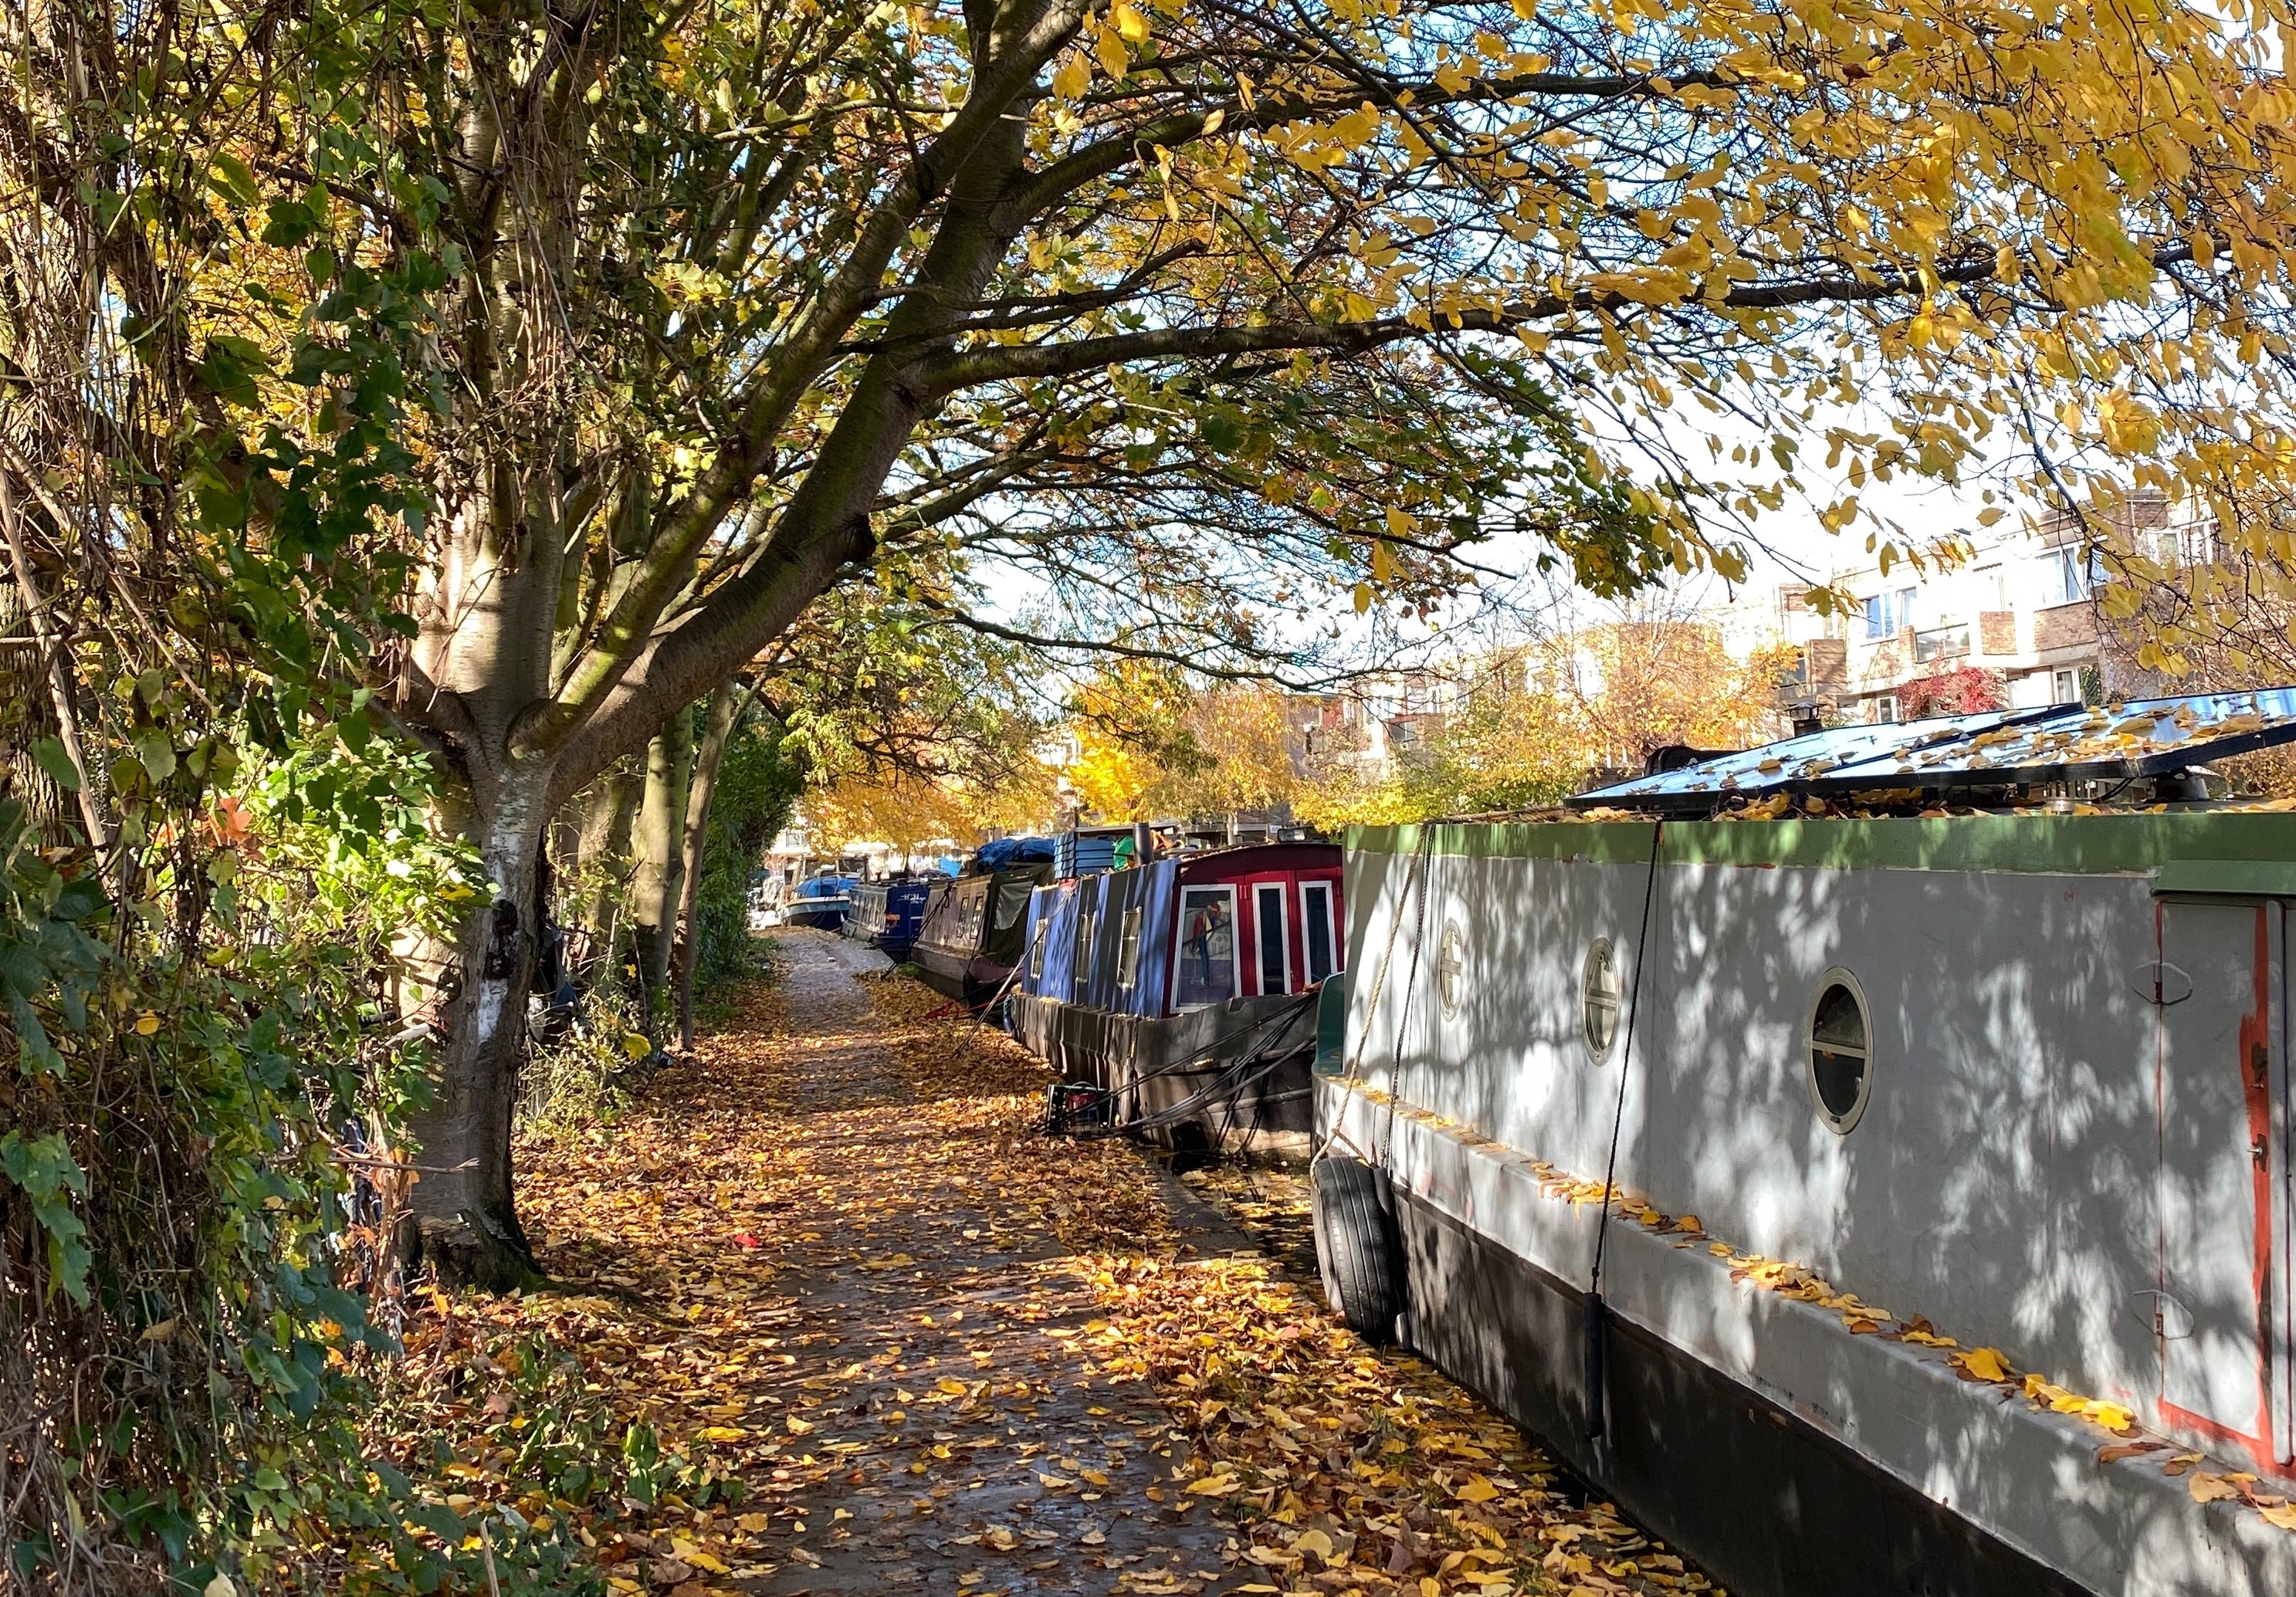 An autumnal canal scene